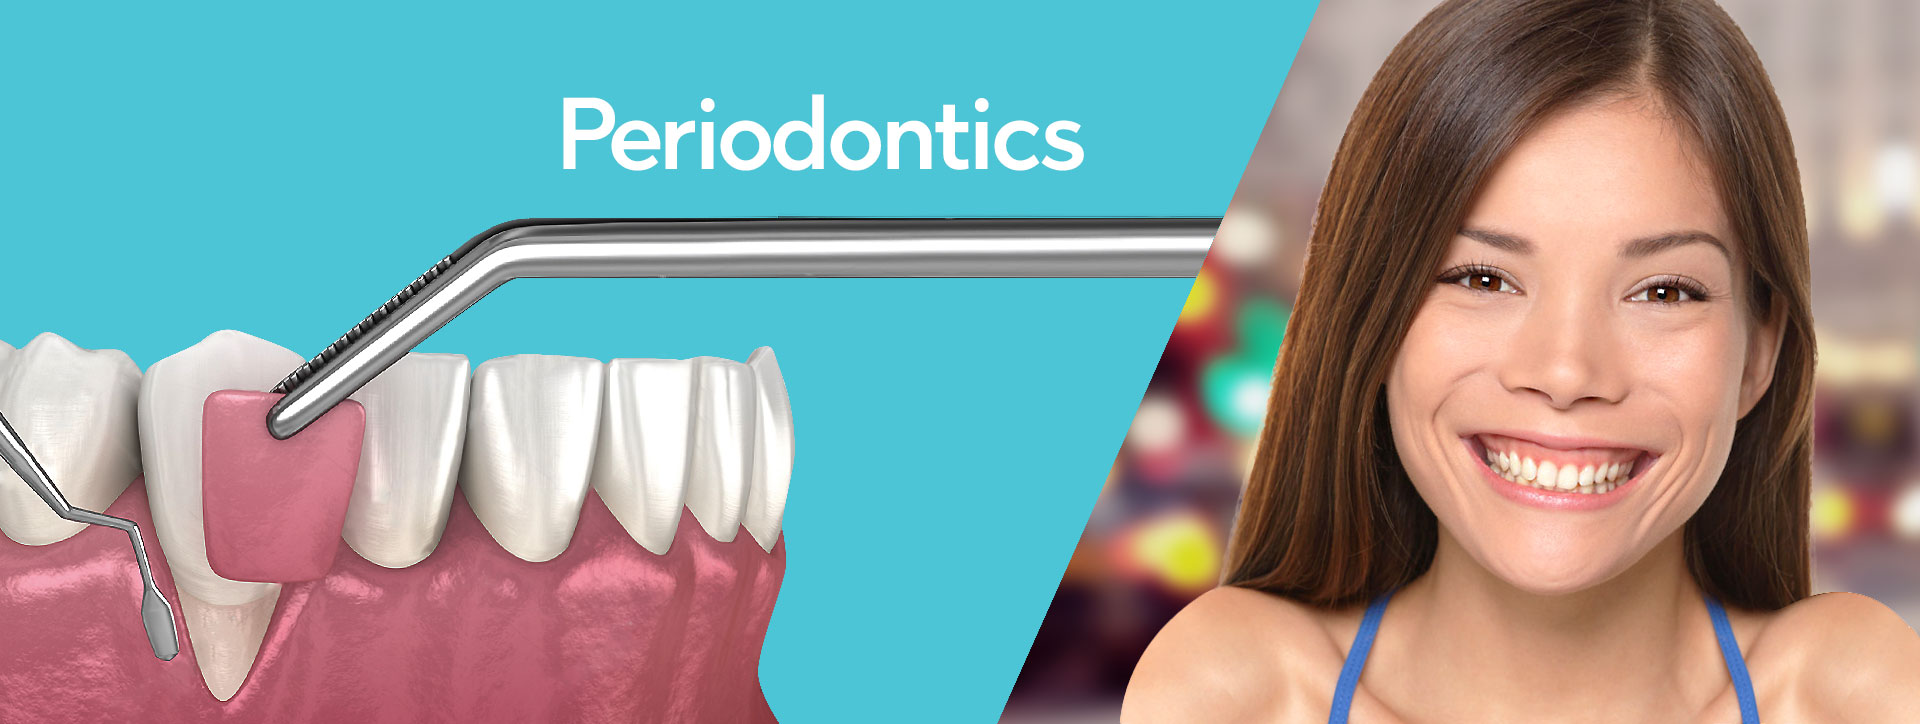 Periodontics-Header